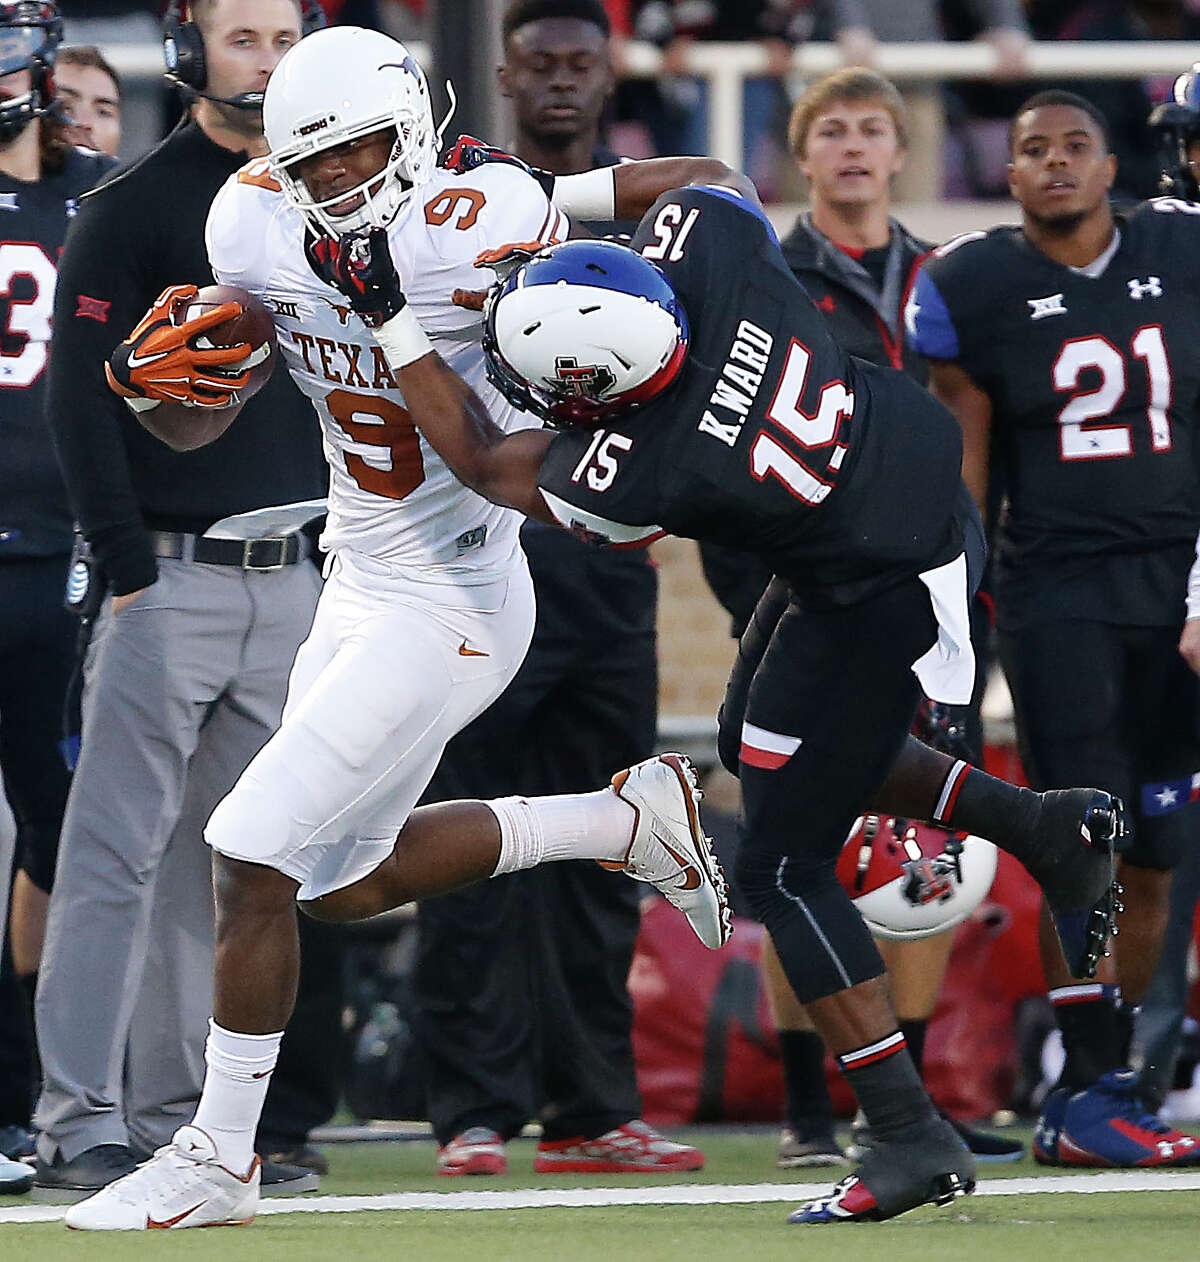 Texas' John Harris tries to get past Texas Tech's Keenon Ward during an NCAA college football game in Lubbock, Texas, Saturday, Nov. 1, 2014. (AP Photo/Lubbock Avalanche-Journal, Tori Eichberger)